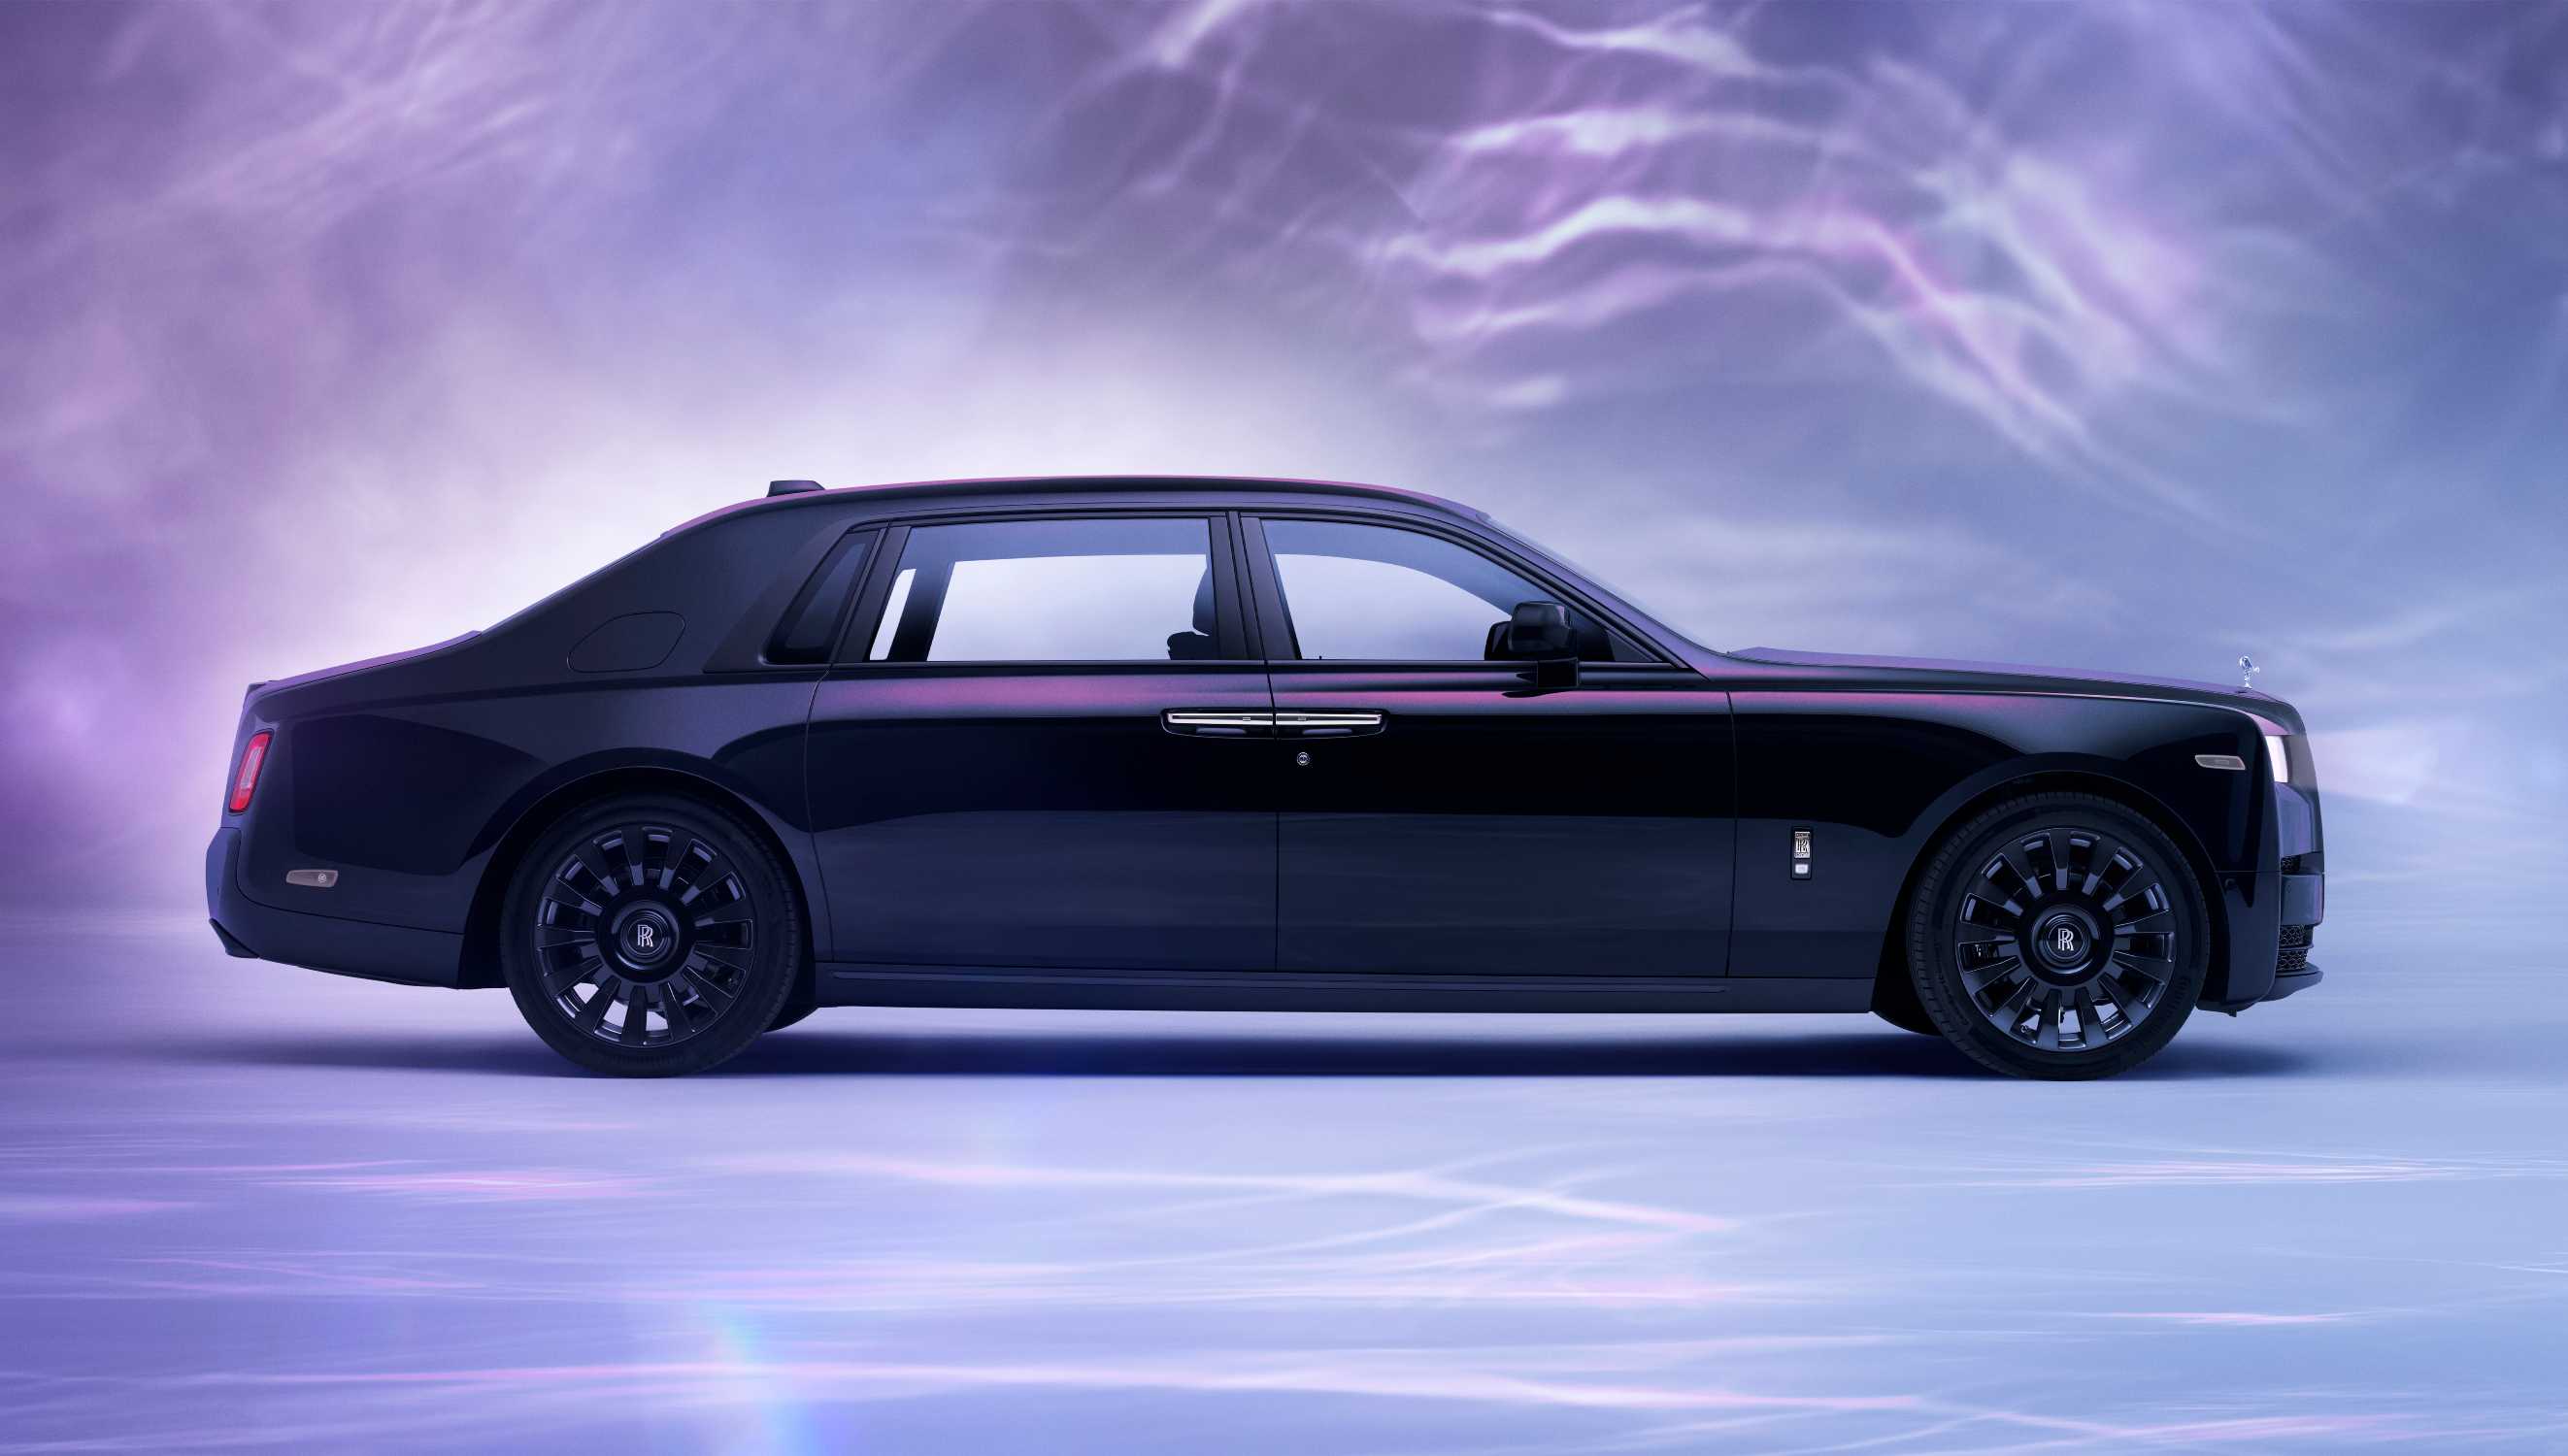 Phantom Syntopia Rolls Royce And Iris Van Herpen Collaborate On A Bespoke Masterpiece Inspired